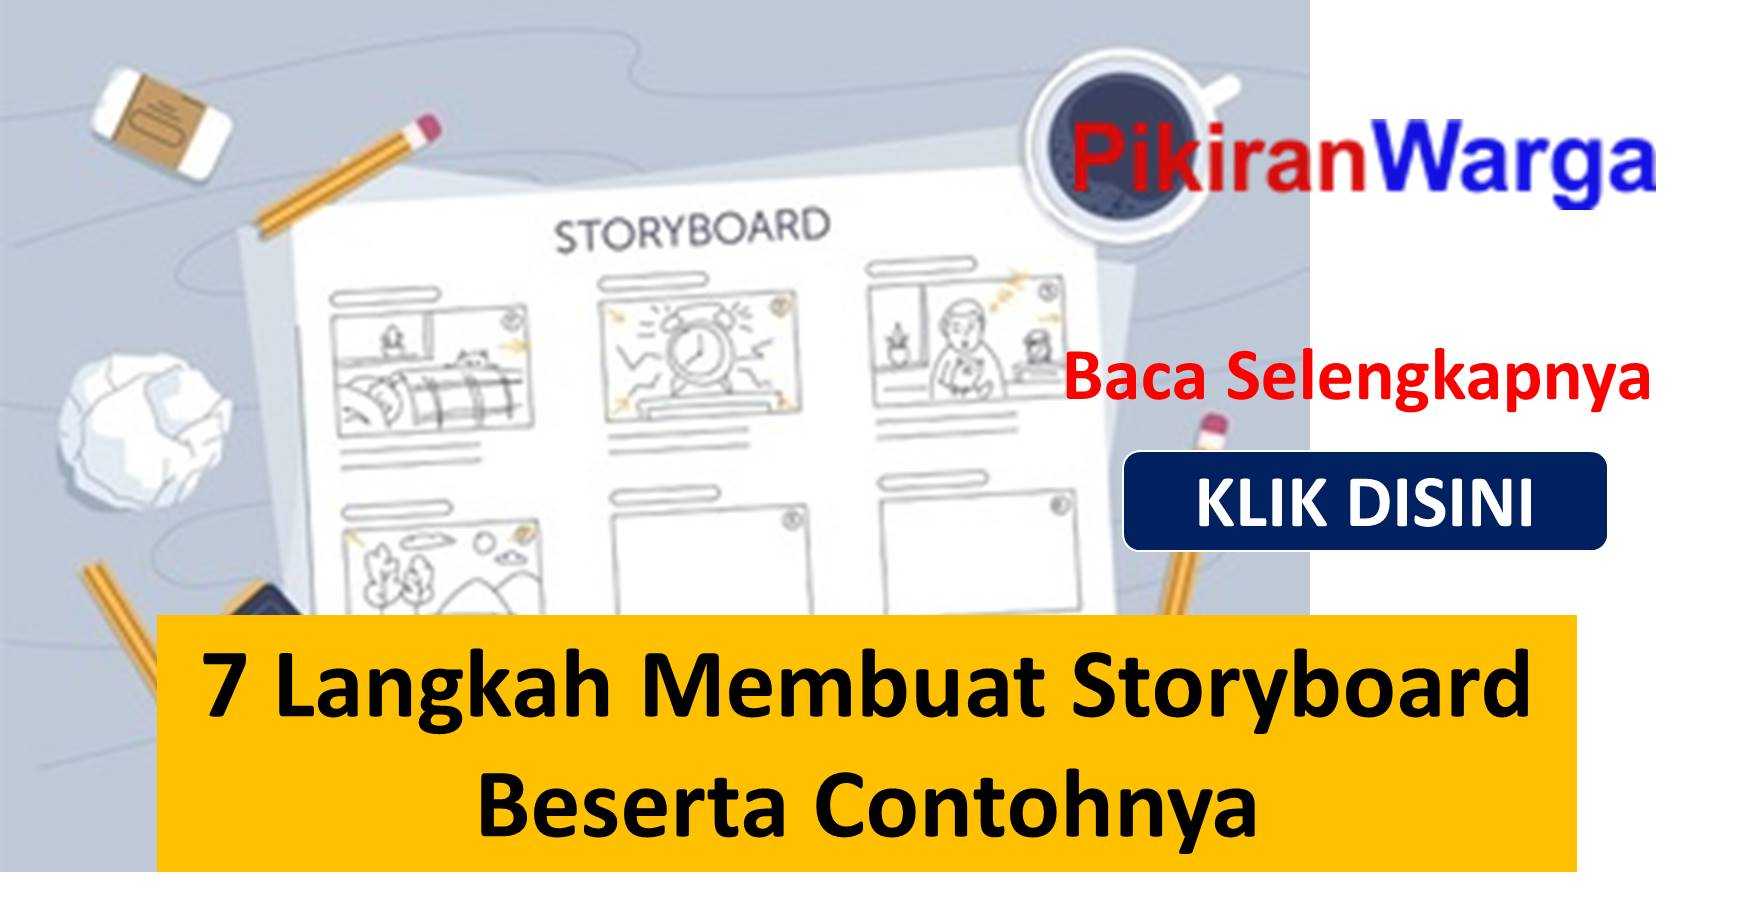 7 Langkah Membuat Storyboard Beserta Contohnya